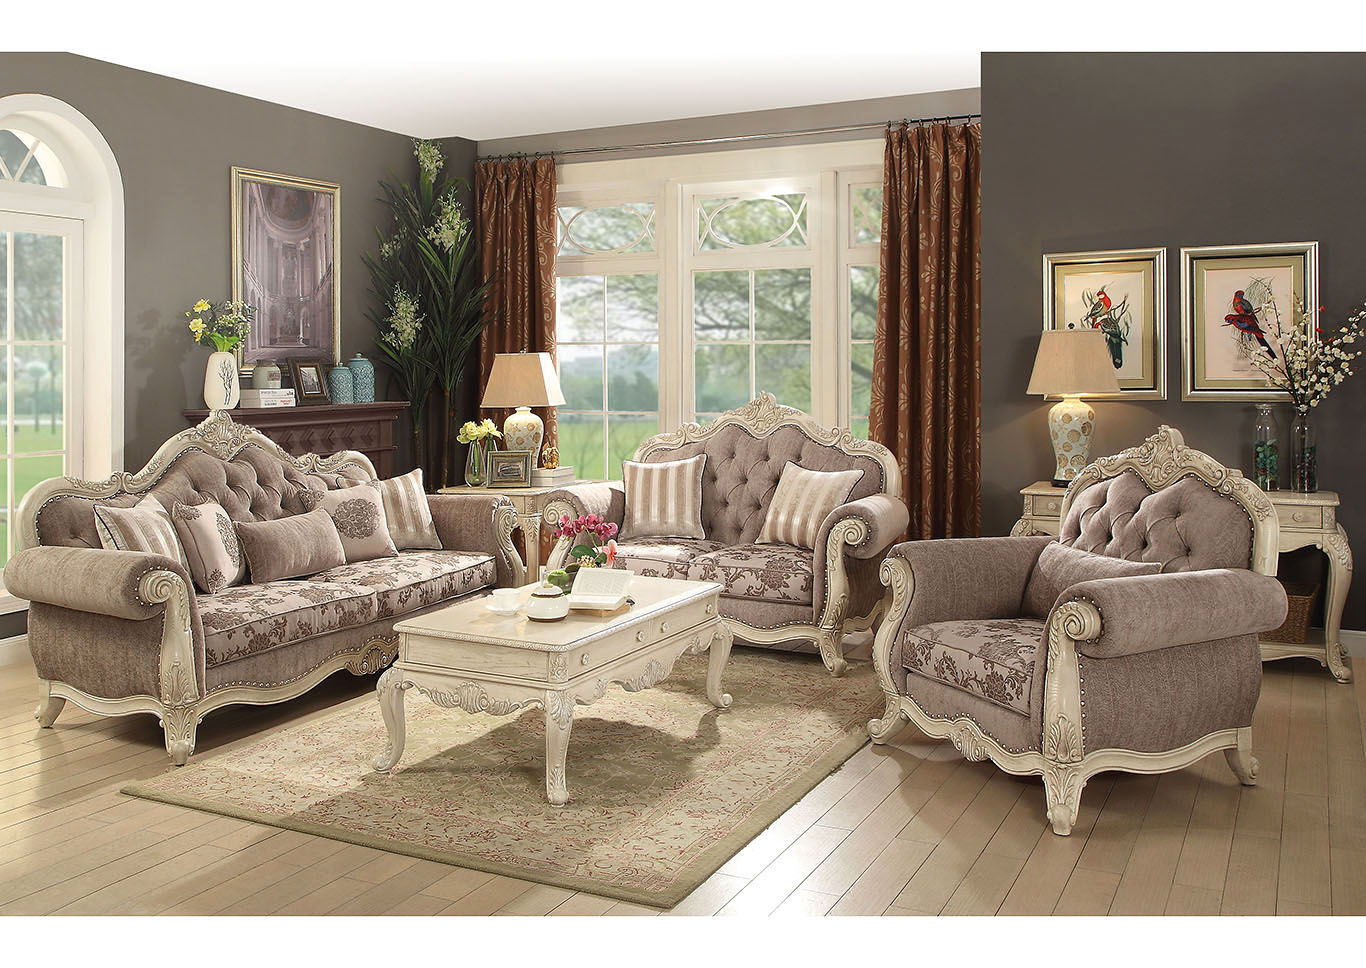 Ragenardus Antique White/Gray Upholstered Sofa and Loveseat,Acme